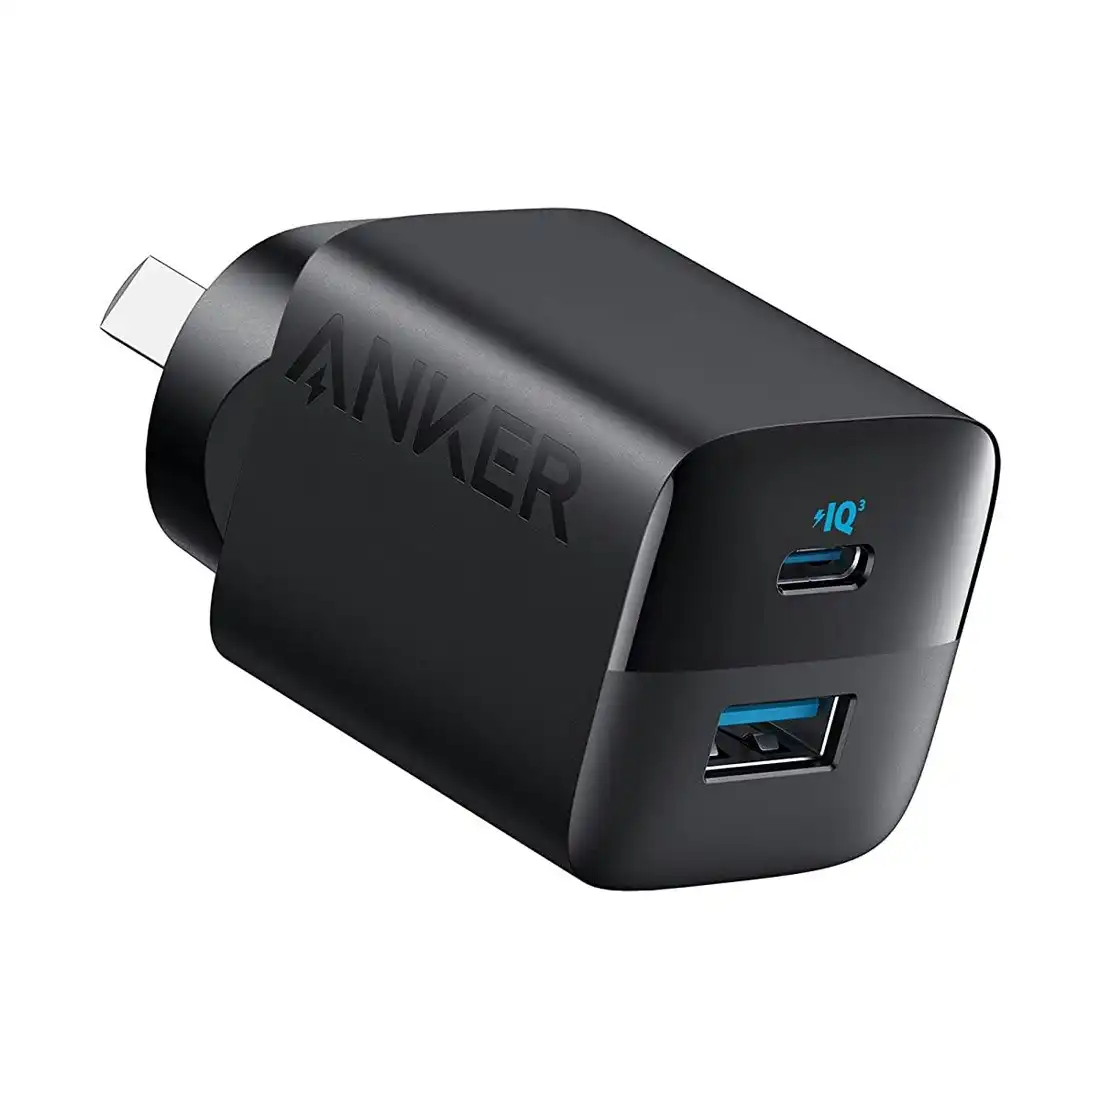 Anker 323 USB C Charger (33W) - Black